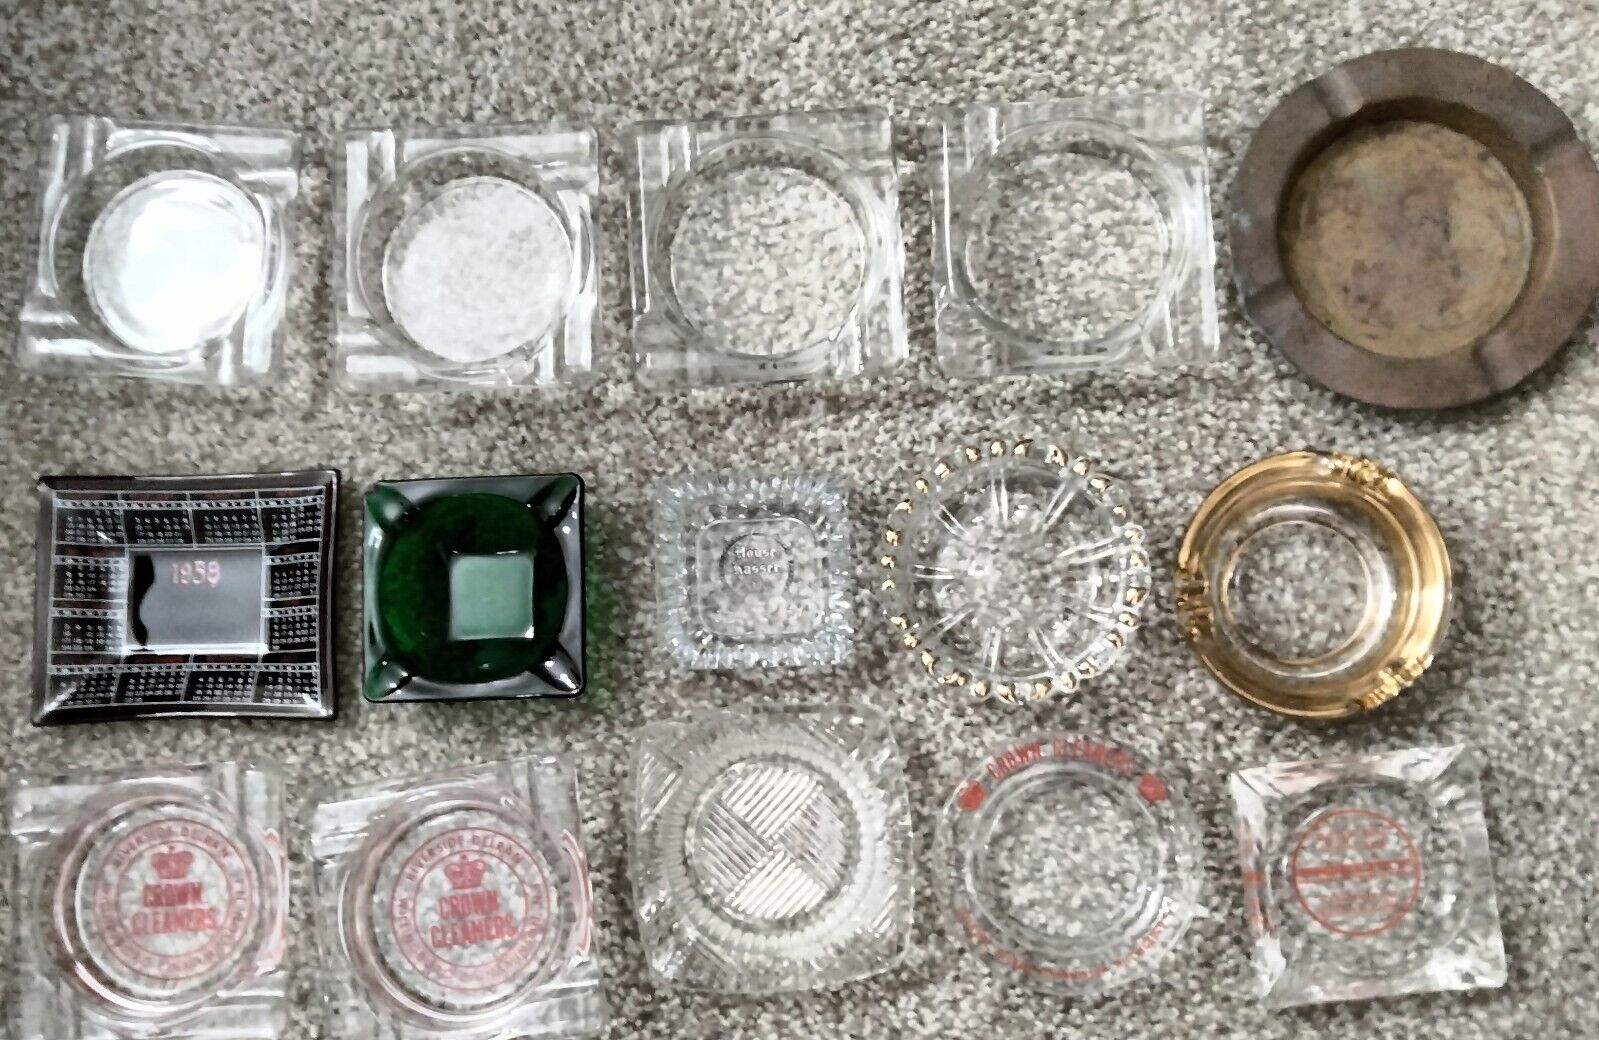 15 vintage ash trays ashtrays lot round square green patterned 1958 calendar